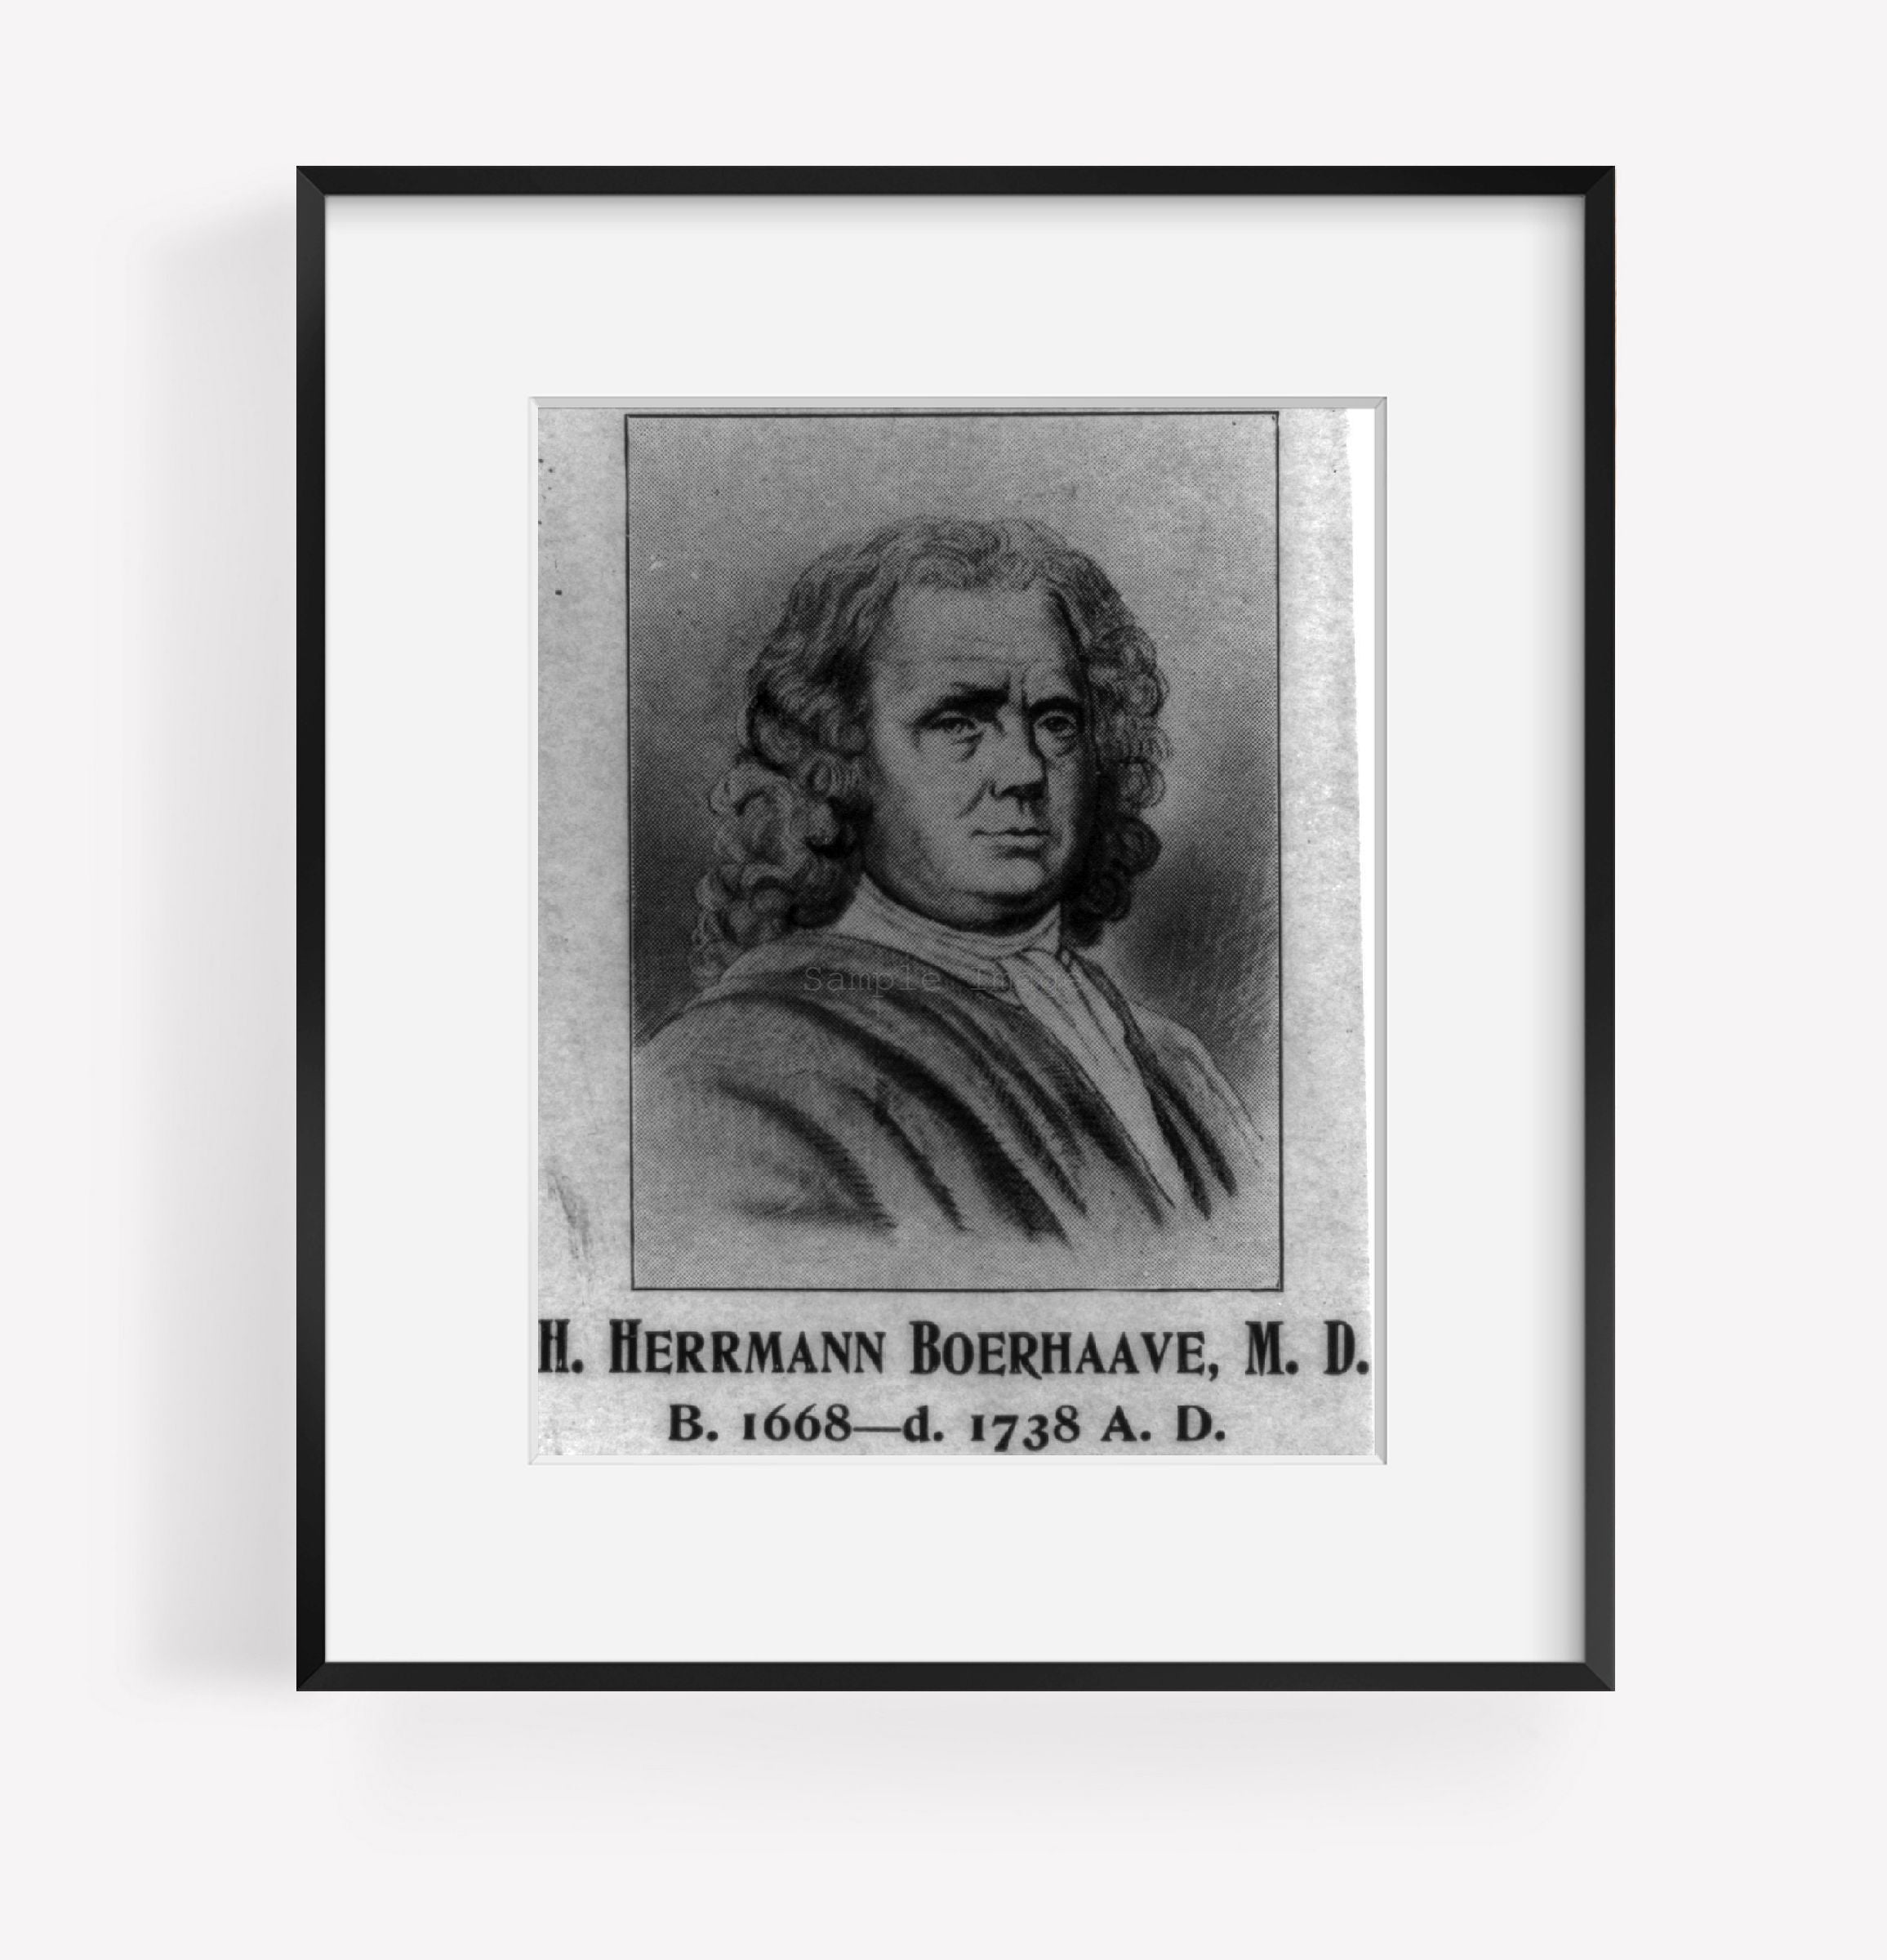 Vintage photograph: H. Herrmann Boerhaave, M.D. (b. 1668-d.1738)